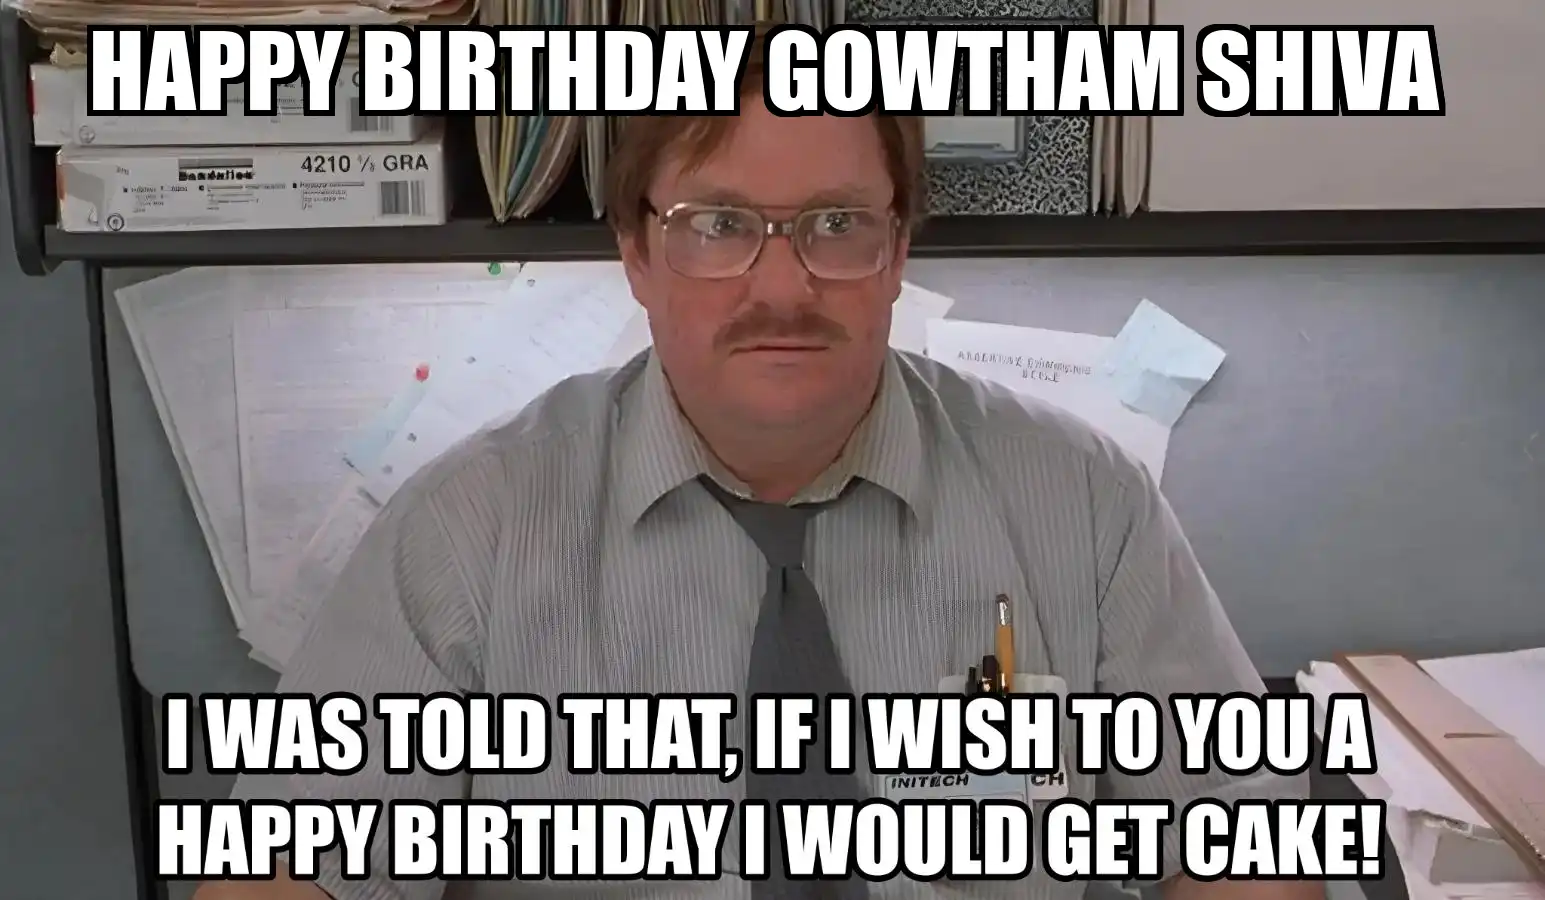 Happy Birthday Gowtham shiva I Would Get A Cake Meme